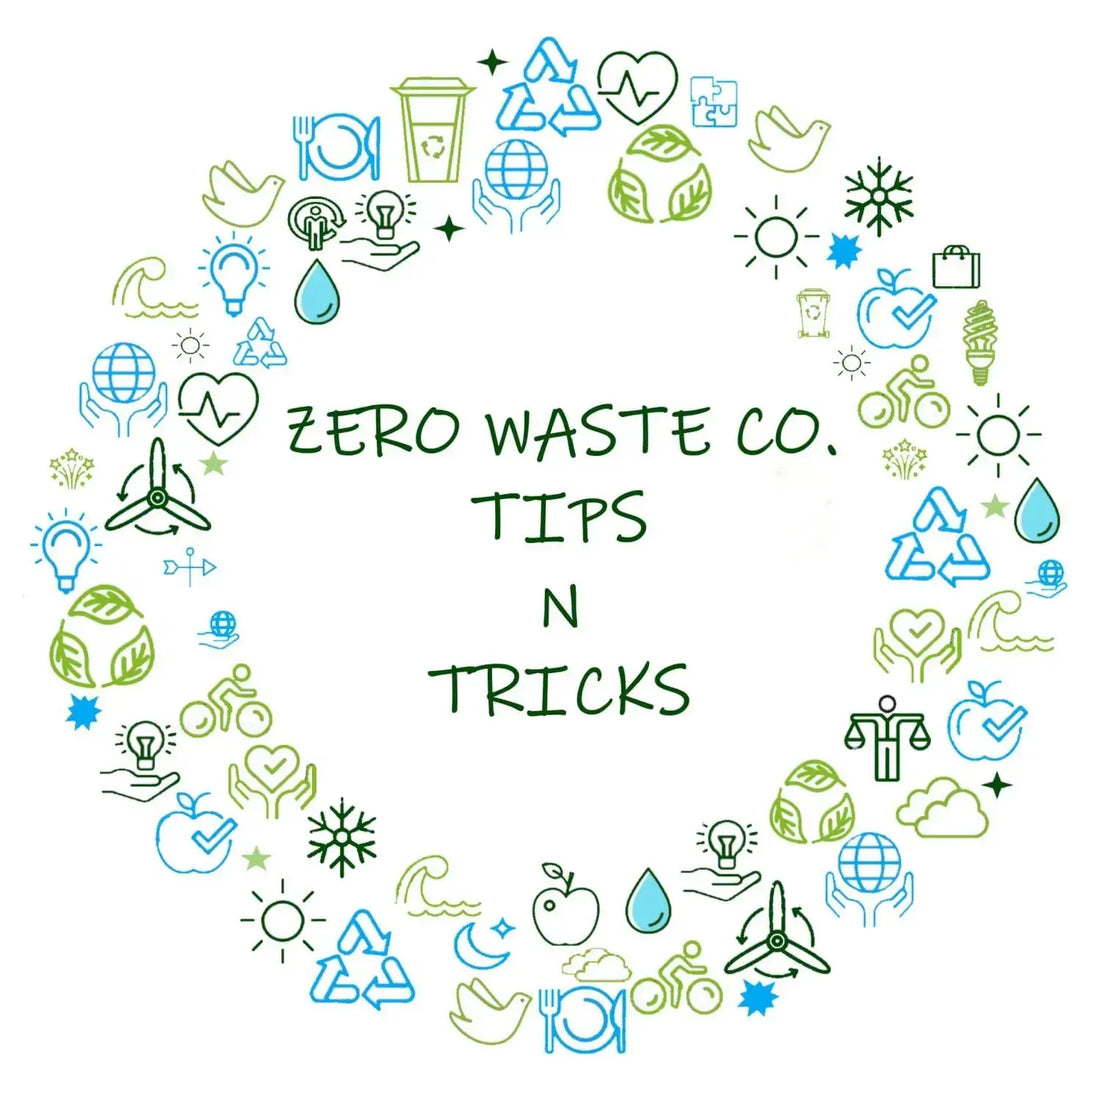 Tips for a Zero Waste lifestyle